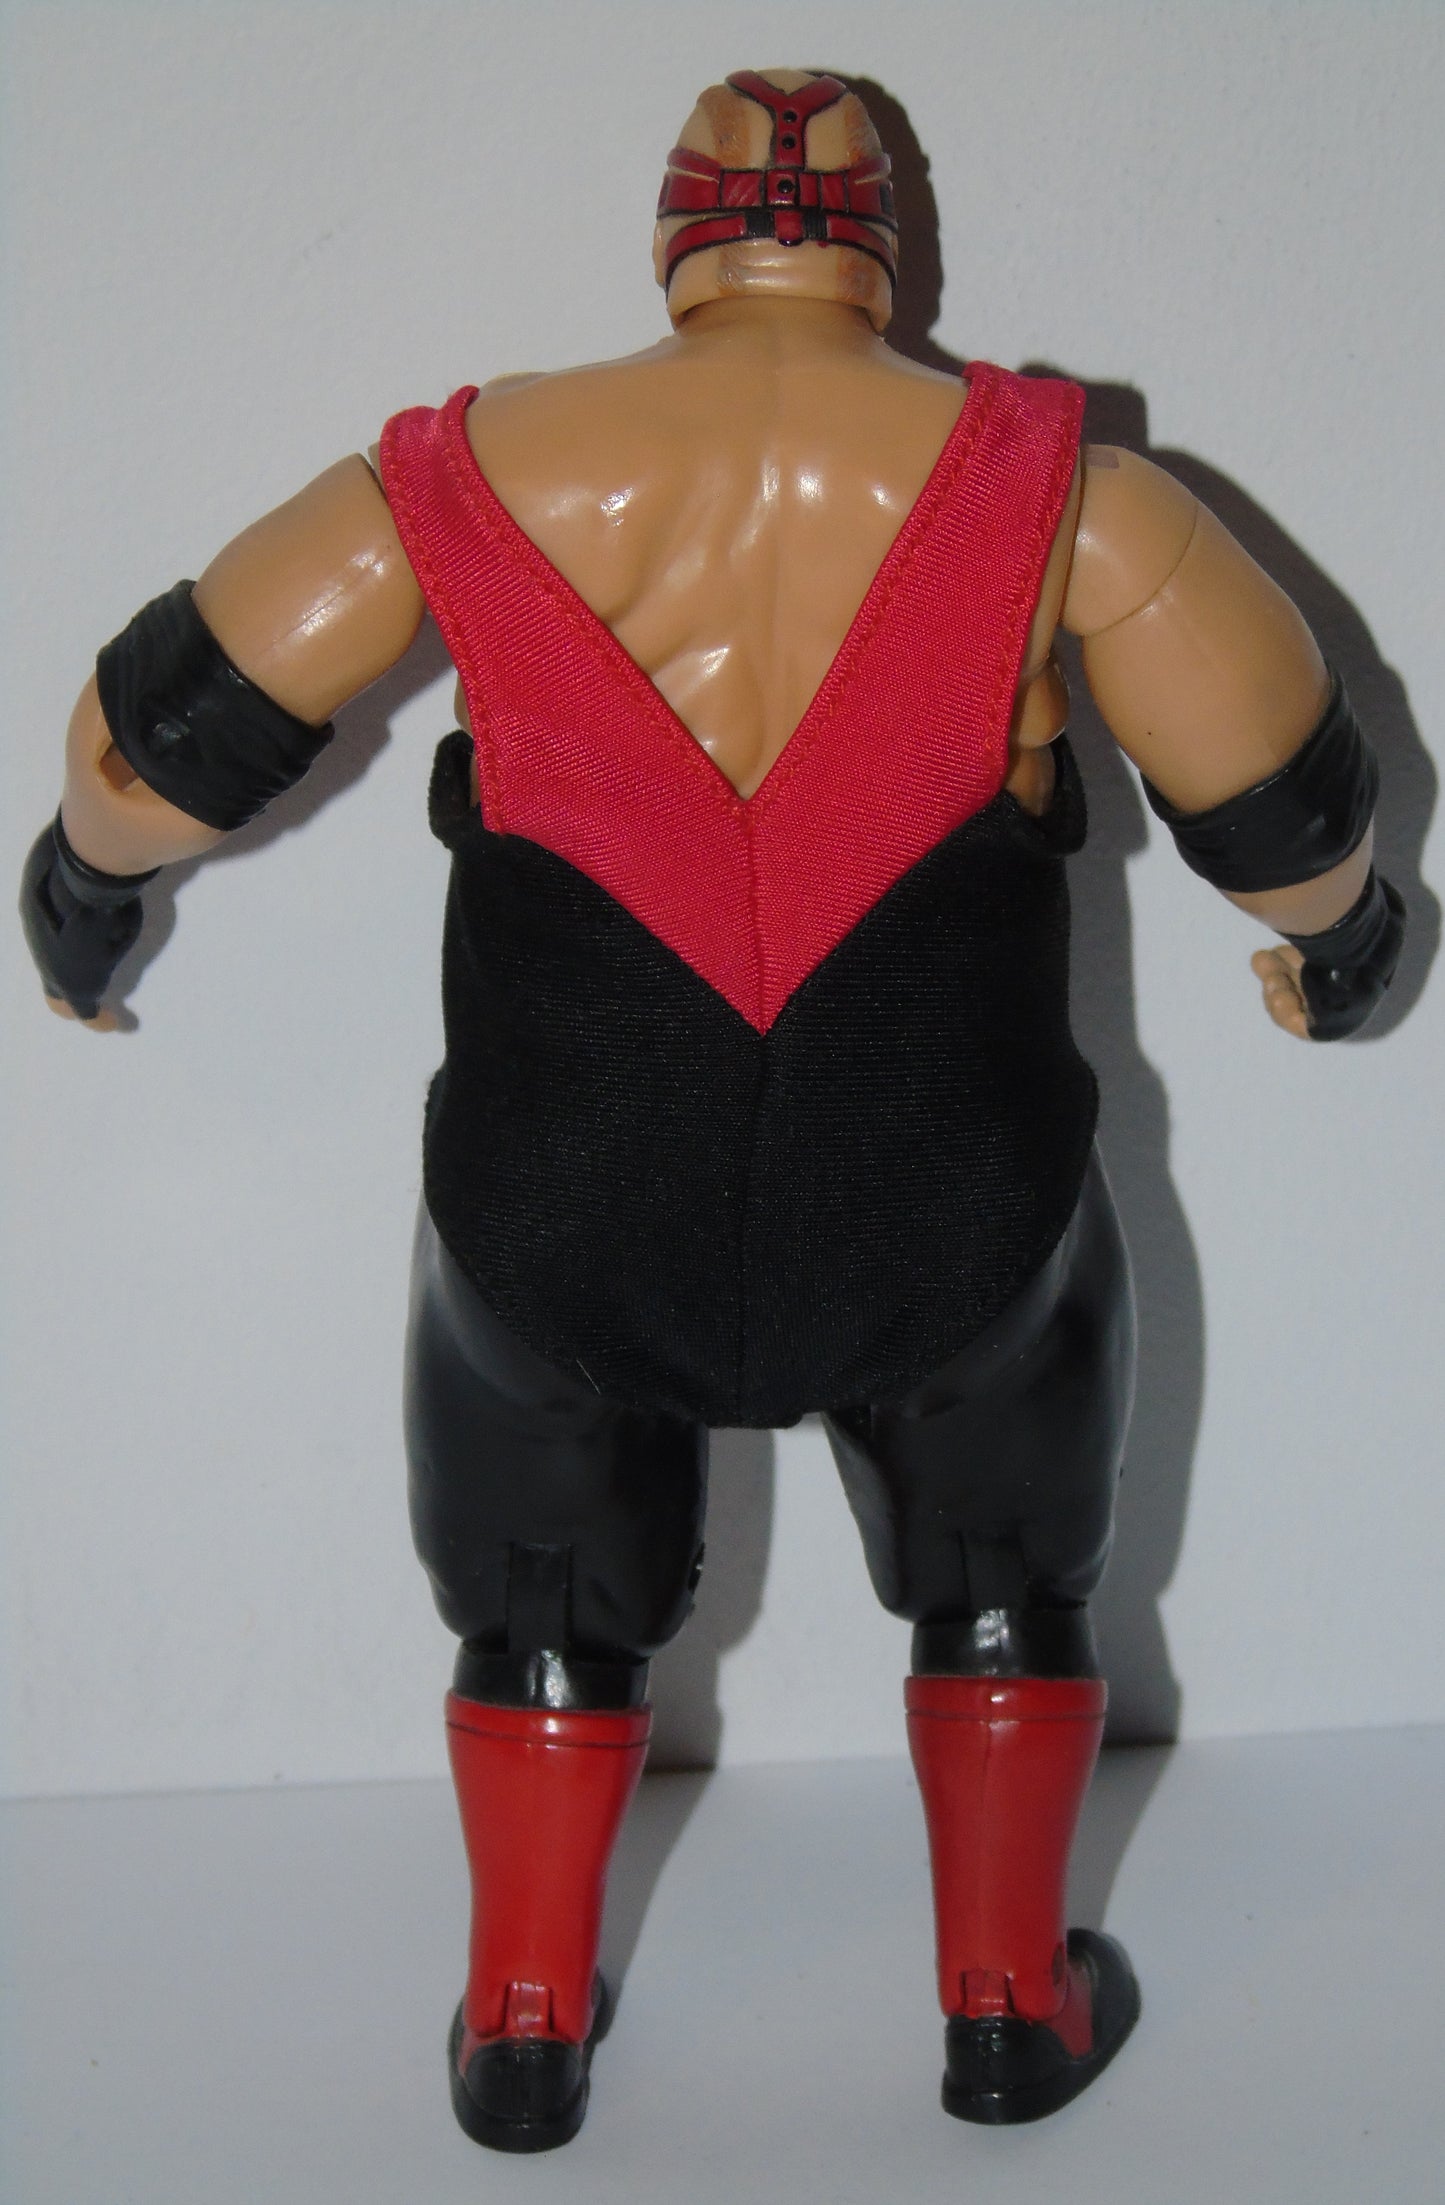 Vader WWE Jakks Classic Wrestling Figure